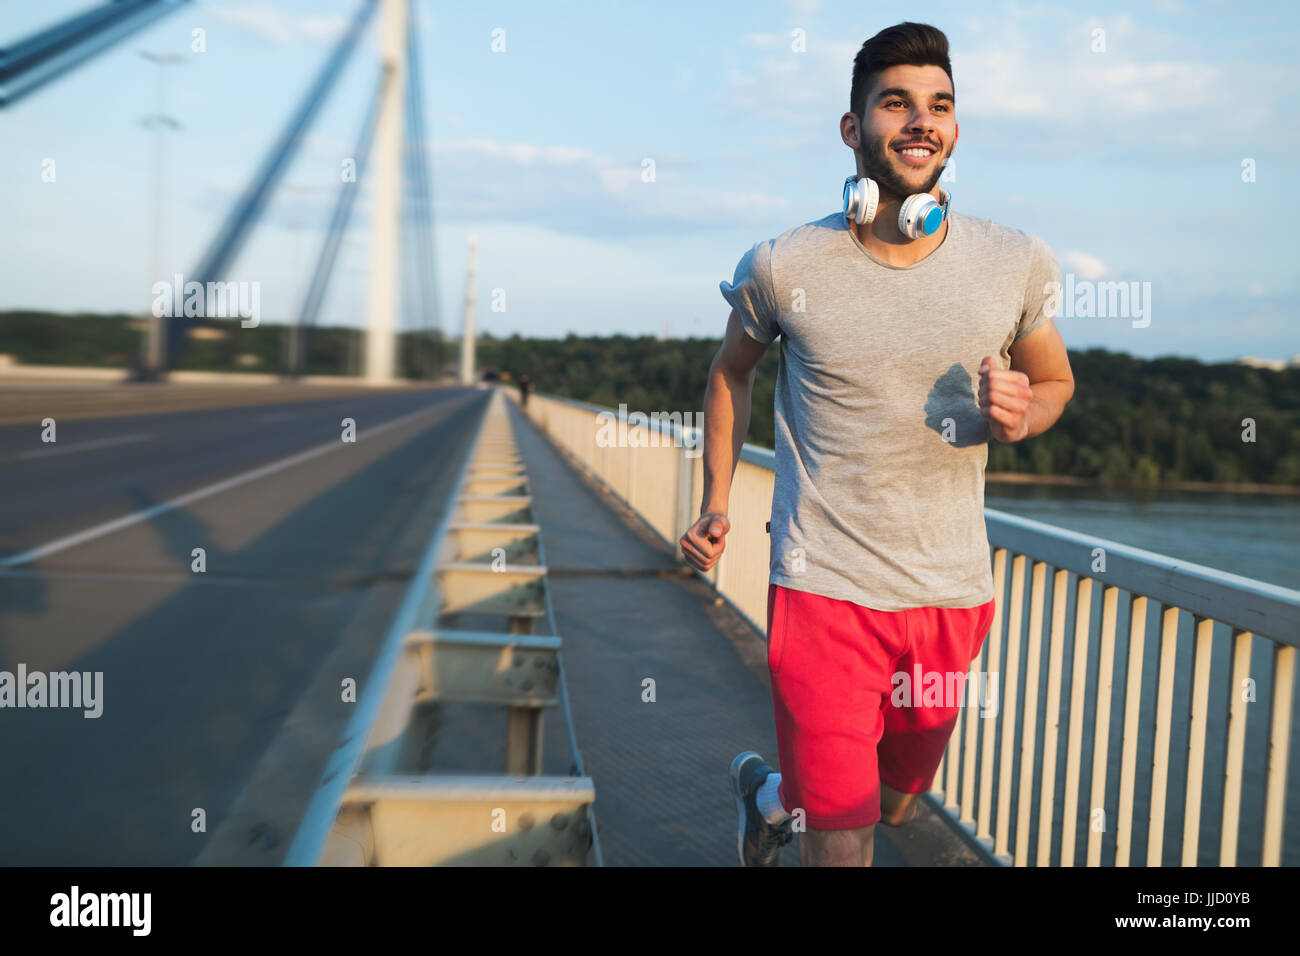 Portrait of handsome man running on bridge Banque D'Images